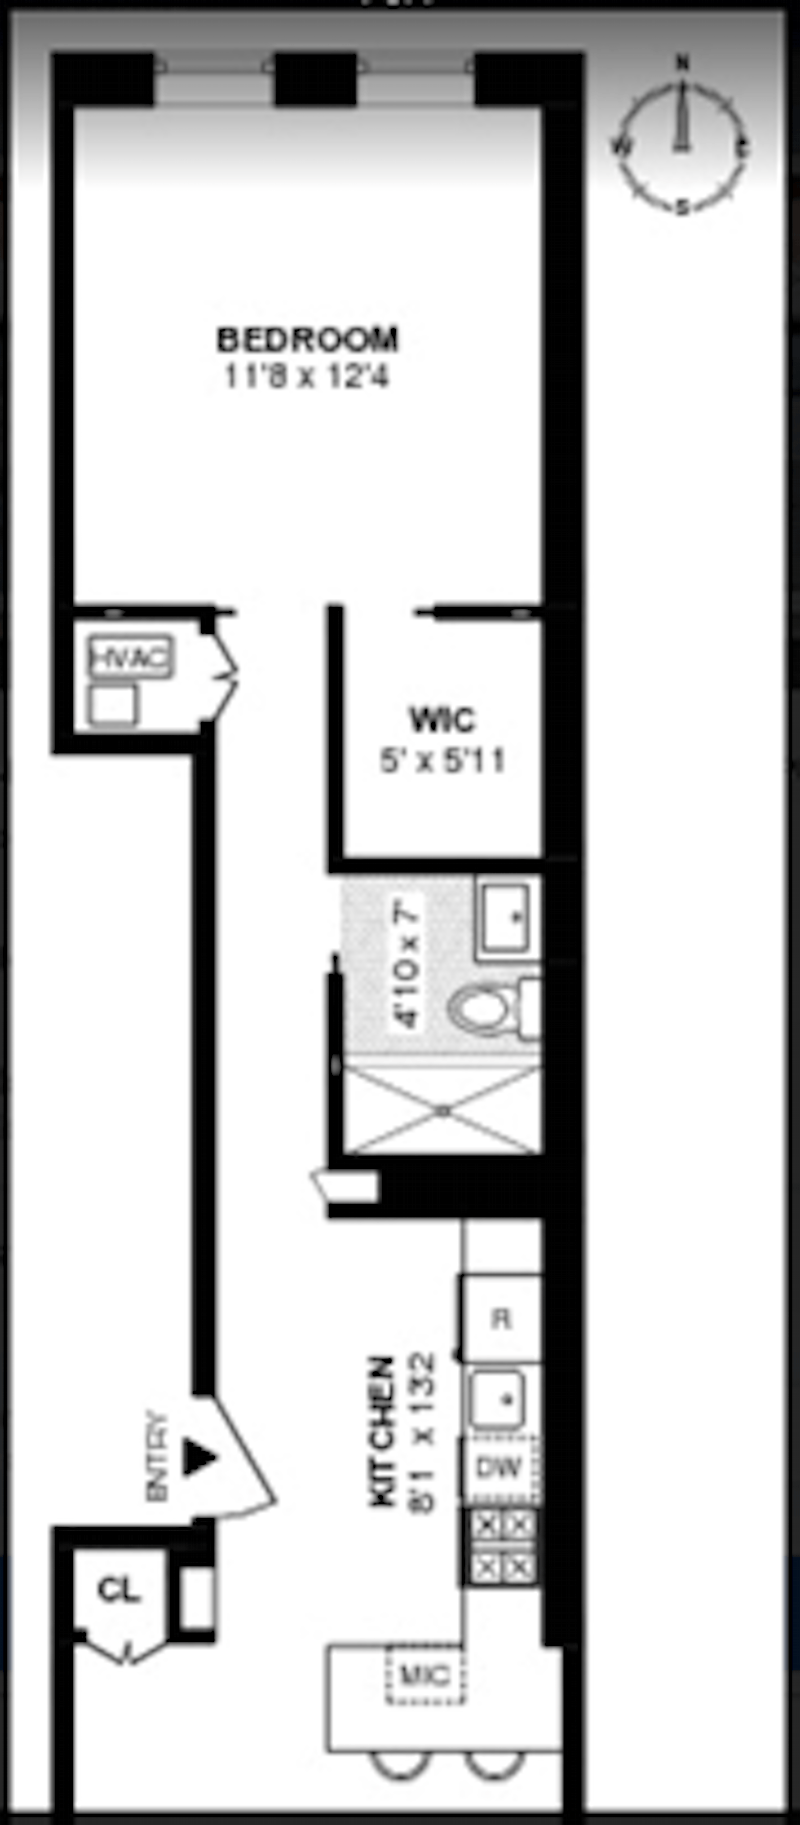 Floorplan for 419 West 48th Street, 3E